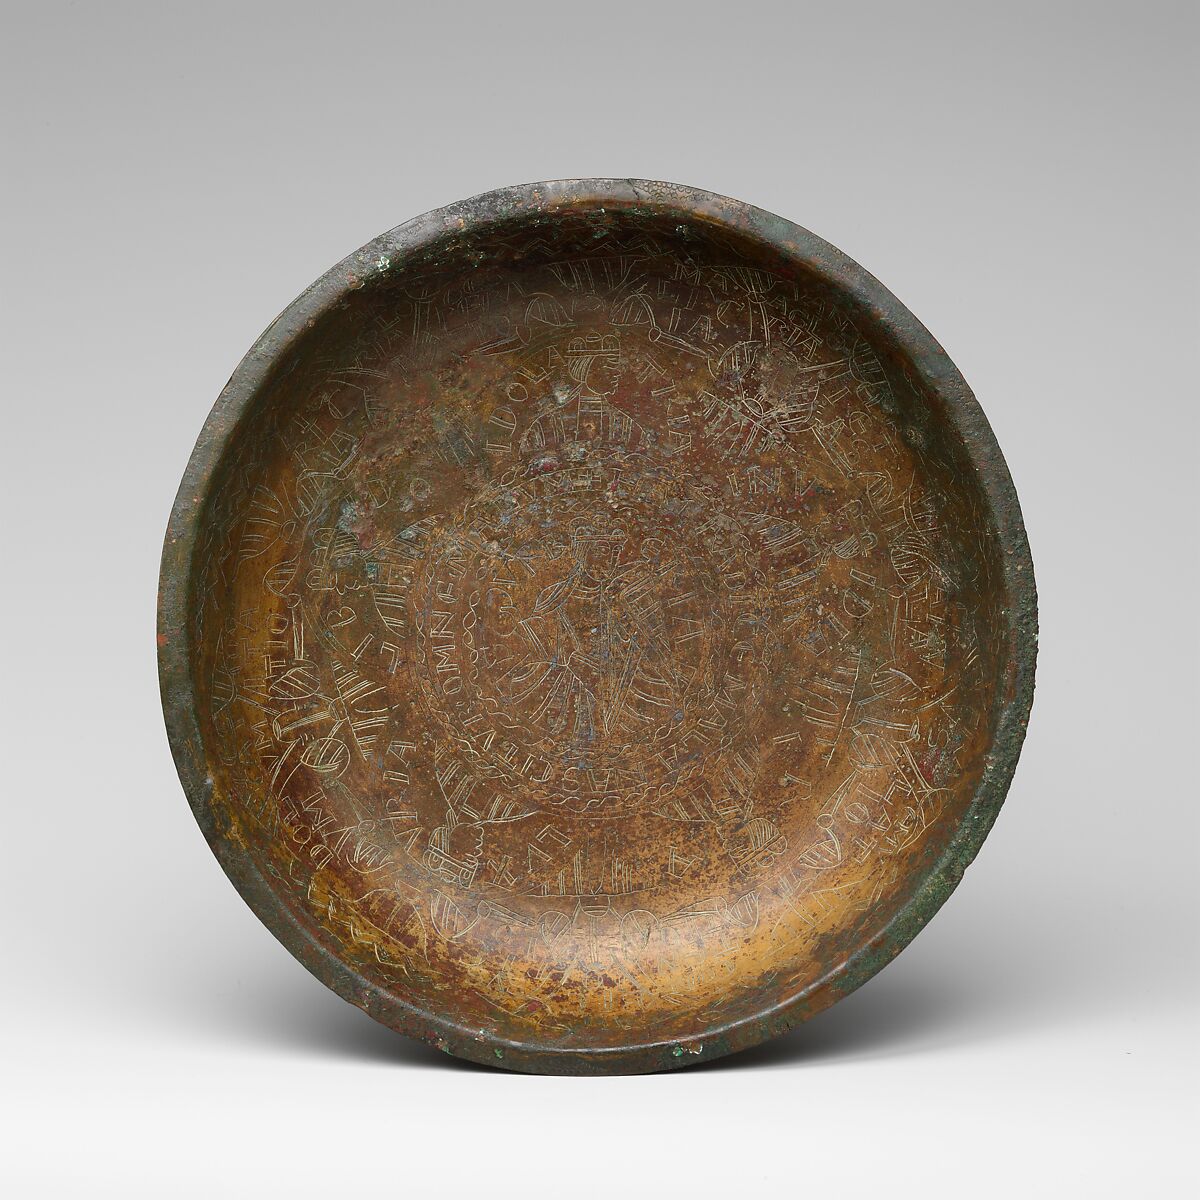 Engraved Bowl, Copper alloy, wrought, Netherlandish 